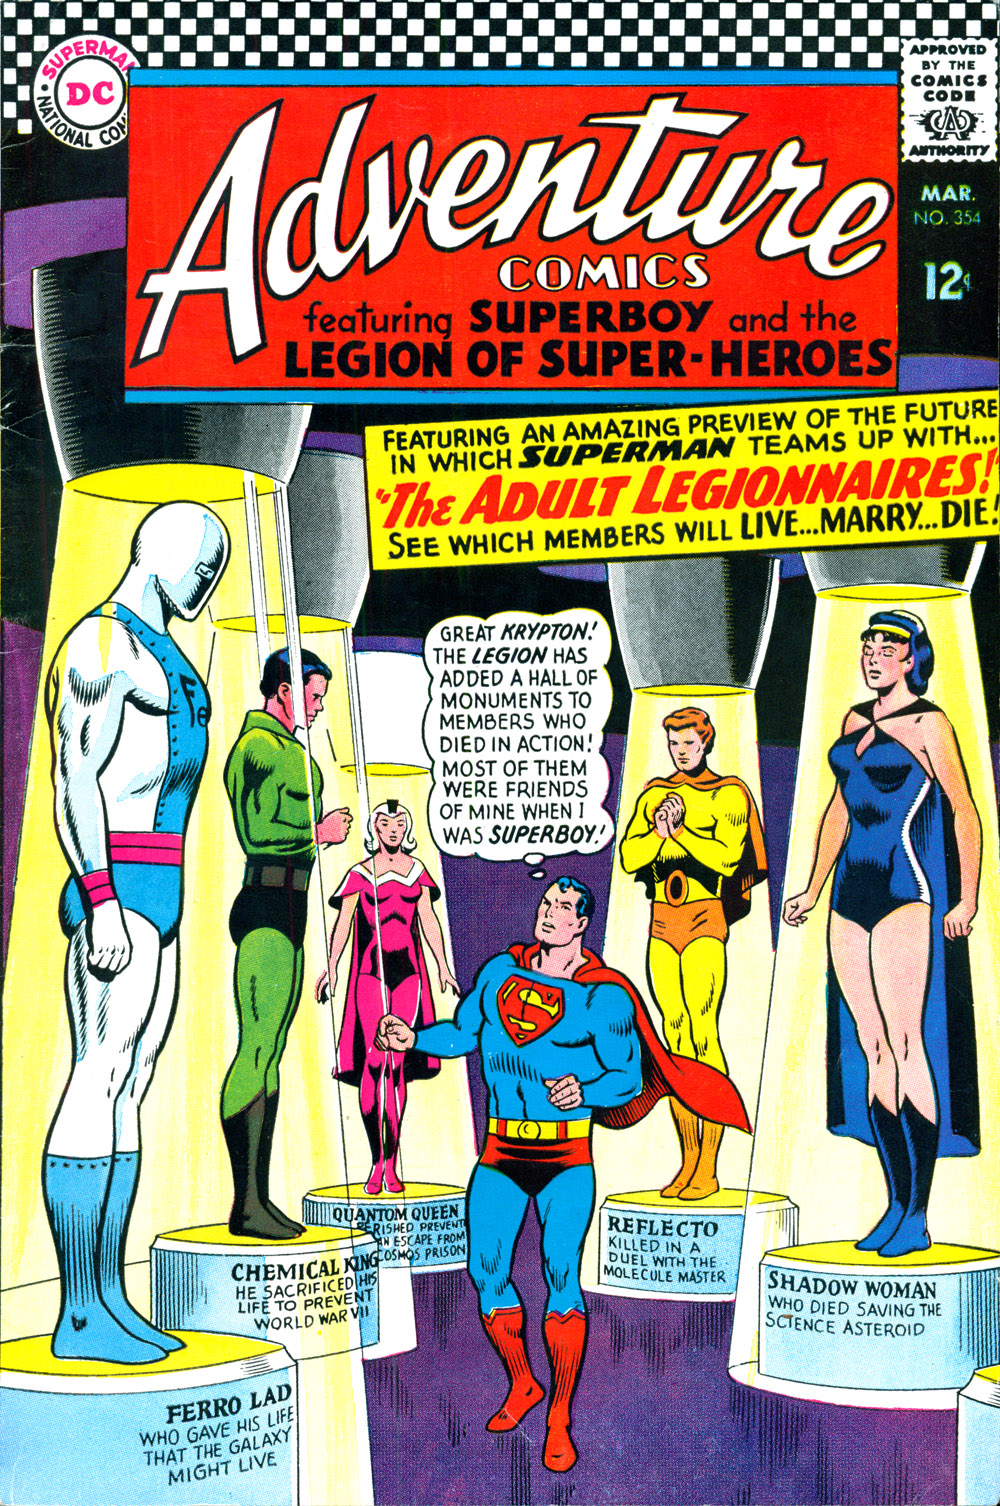 Superhero curtis. Ferro lad DC Comics. Ferro lad. The amazing Adventures of Comics. Tiki Comics.